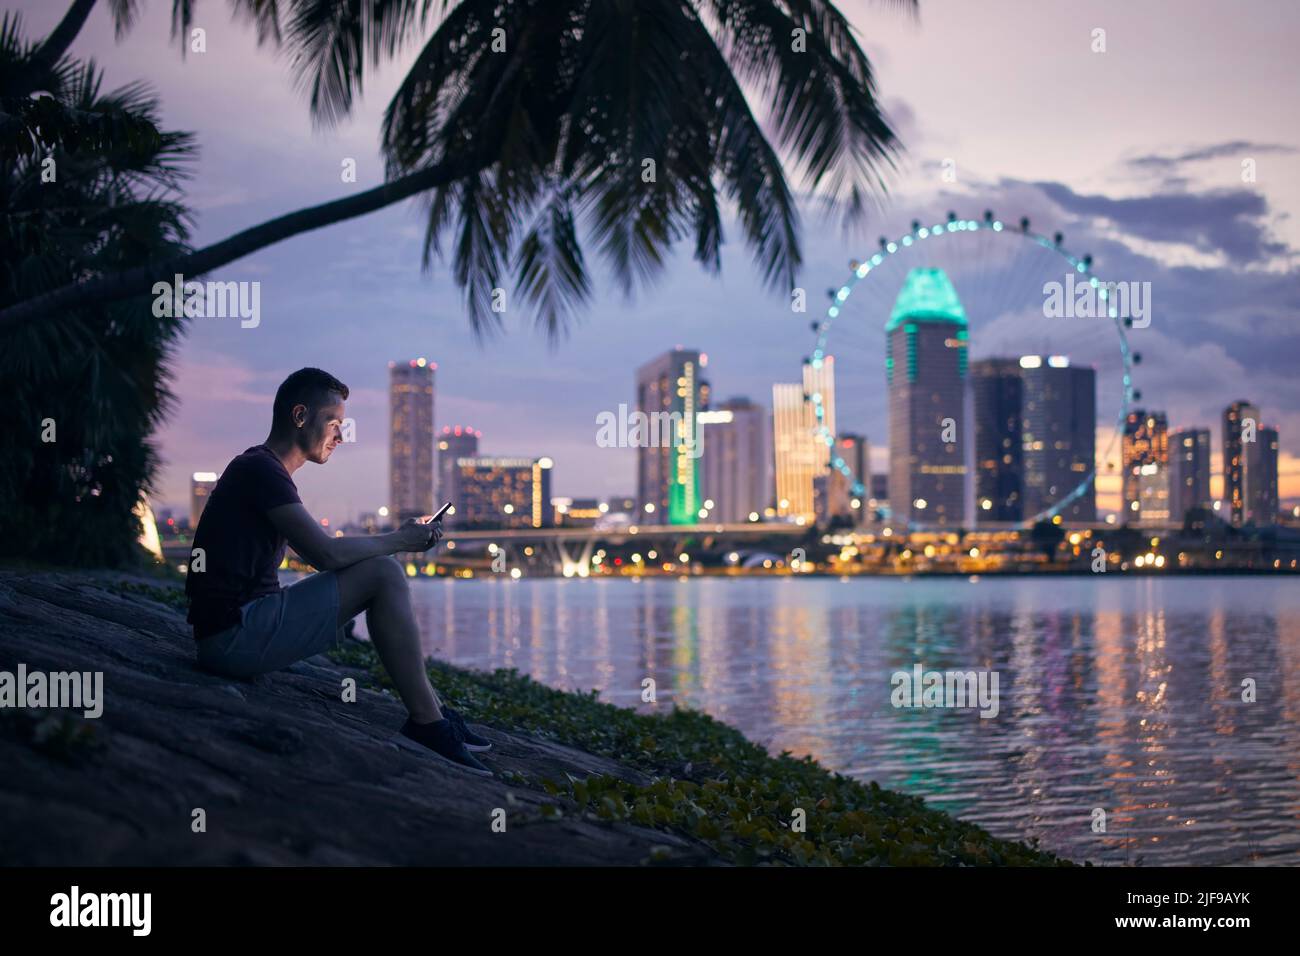 Lonely man sitting under palm tree and using phone against illuminated urban skyline at twilight. Stock Photo